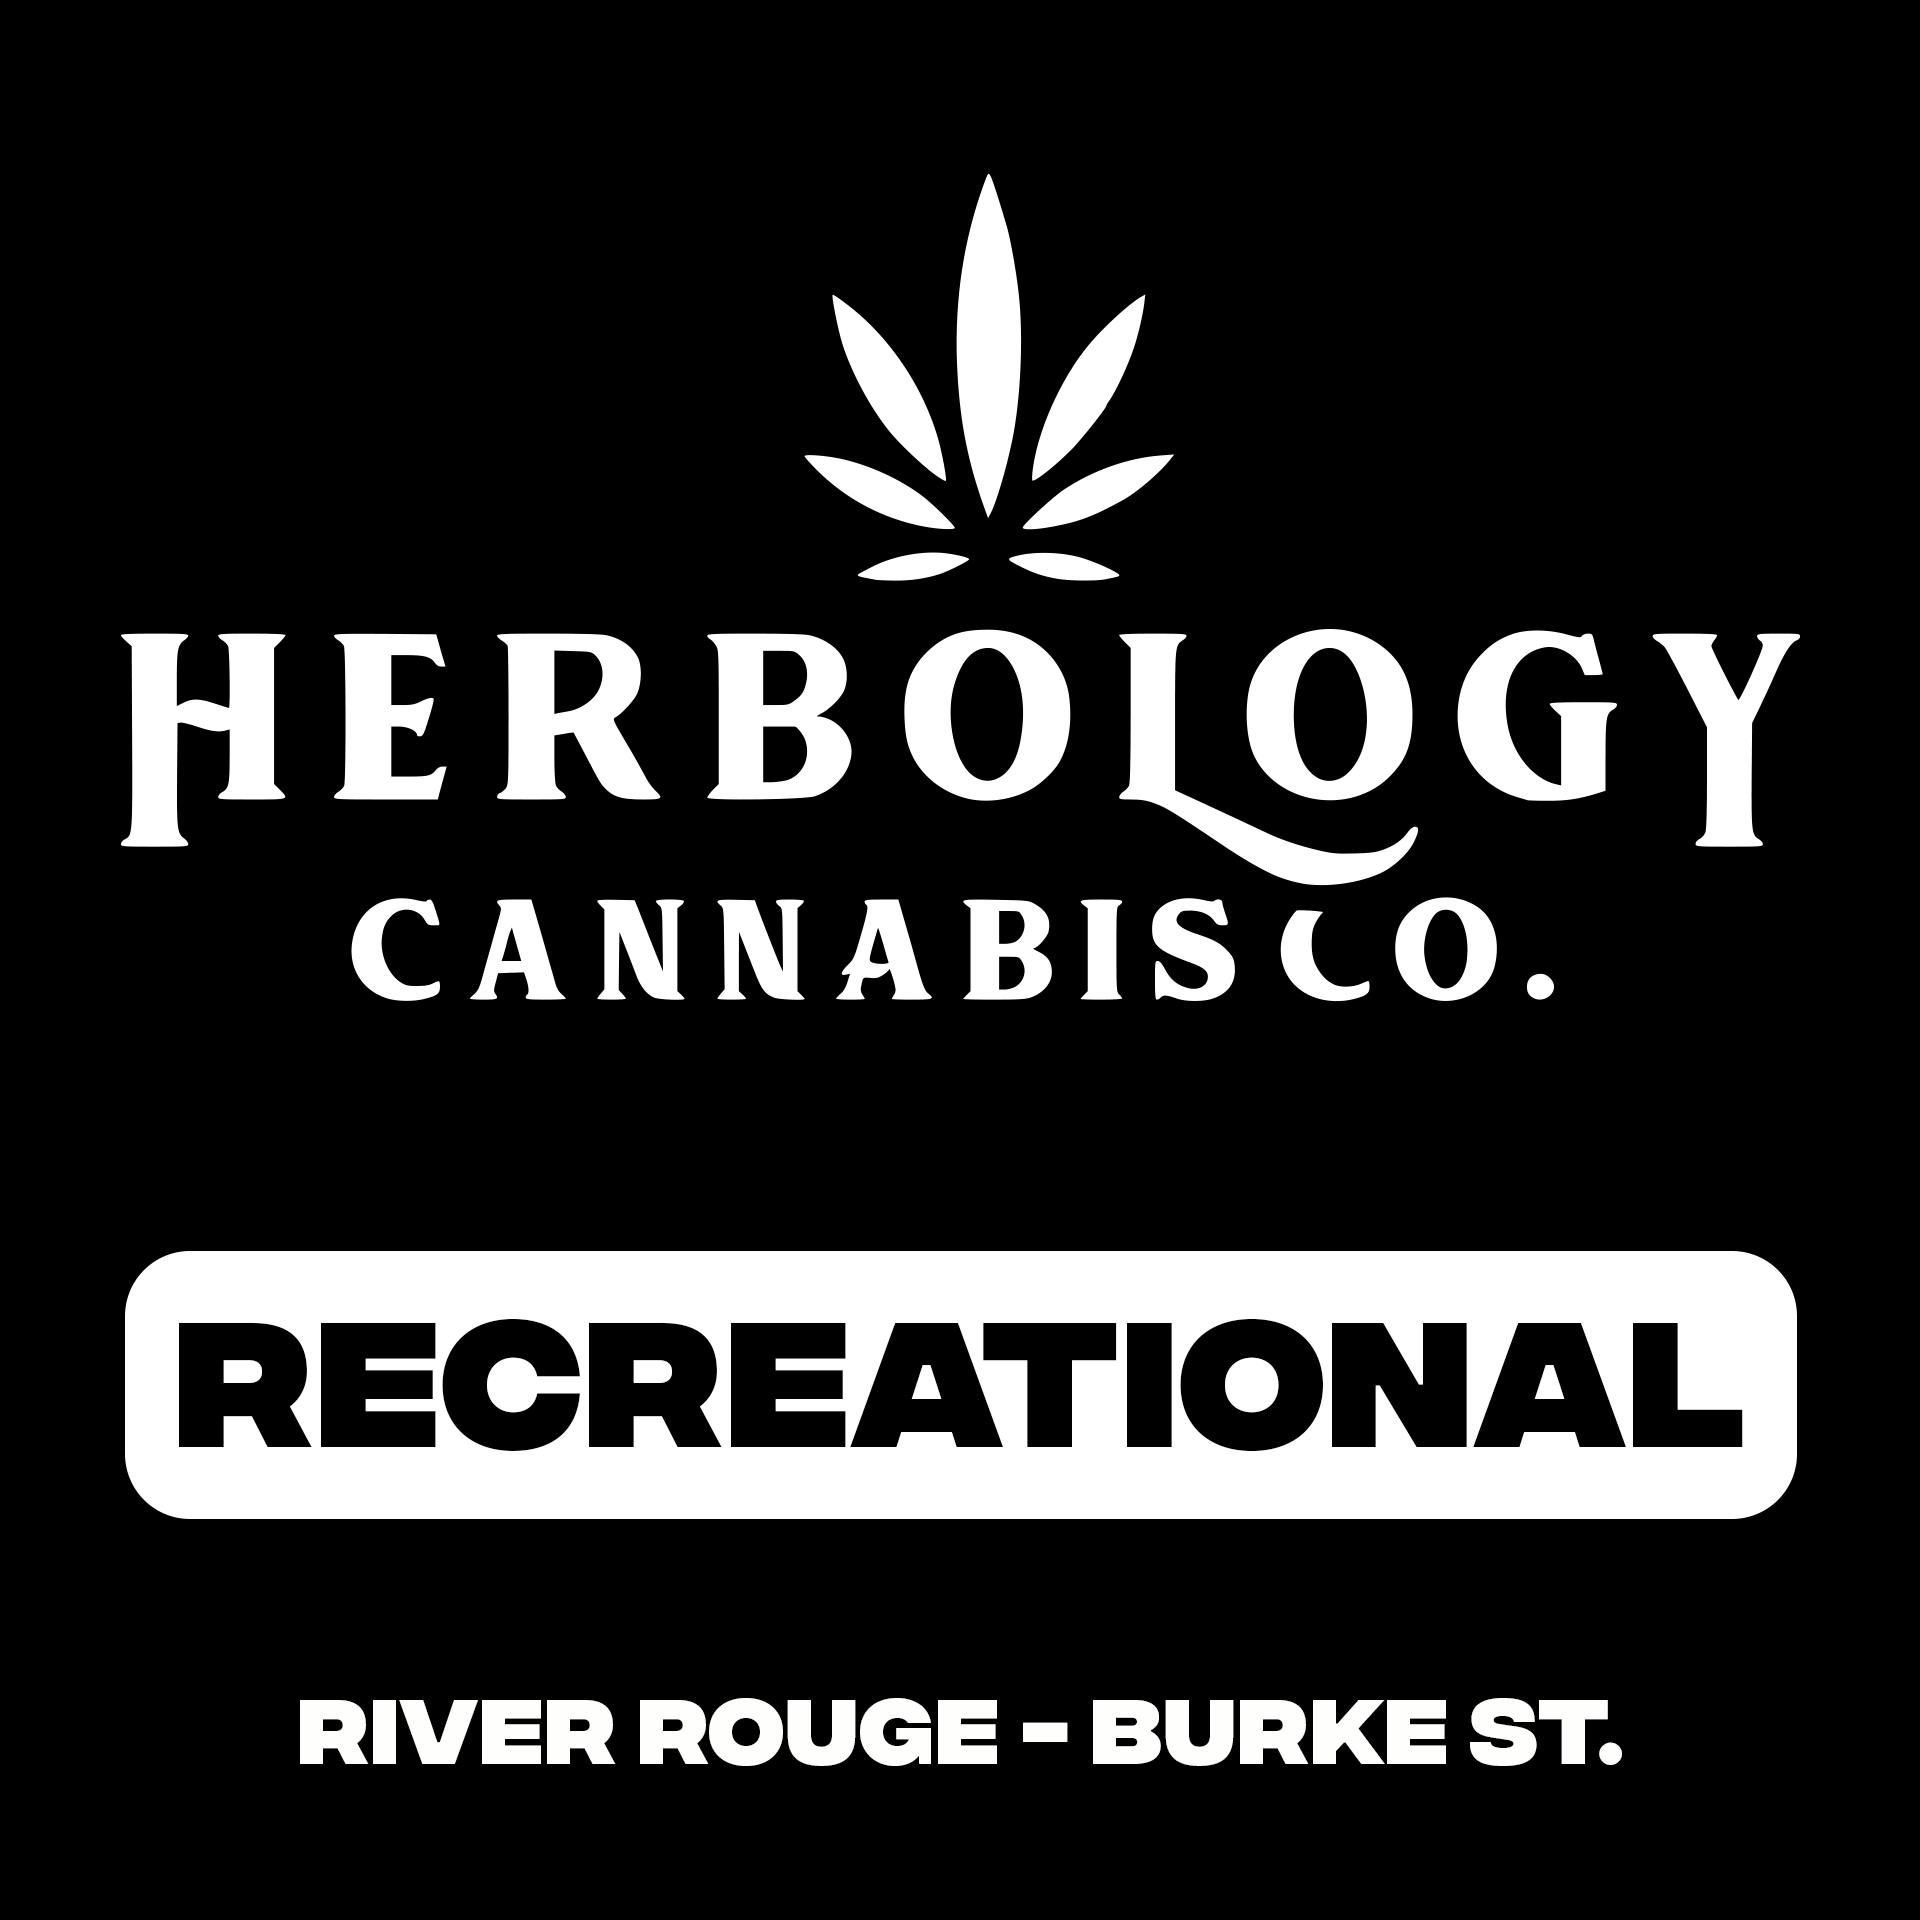 Herbology Cannabis Co. River Rouge - Burke St. - Recreational Cannabis Dispensary-logo